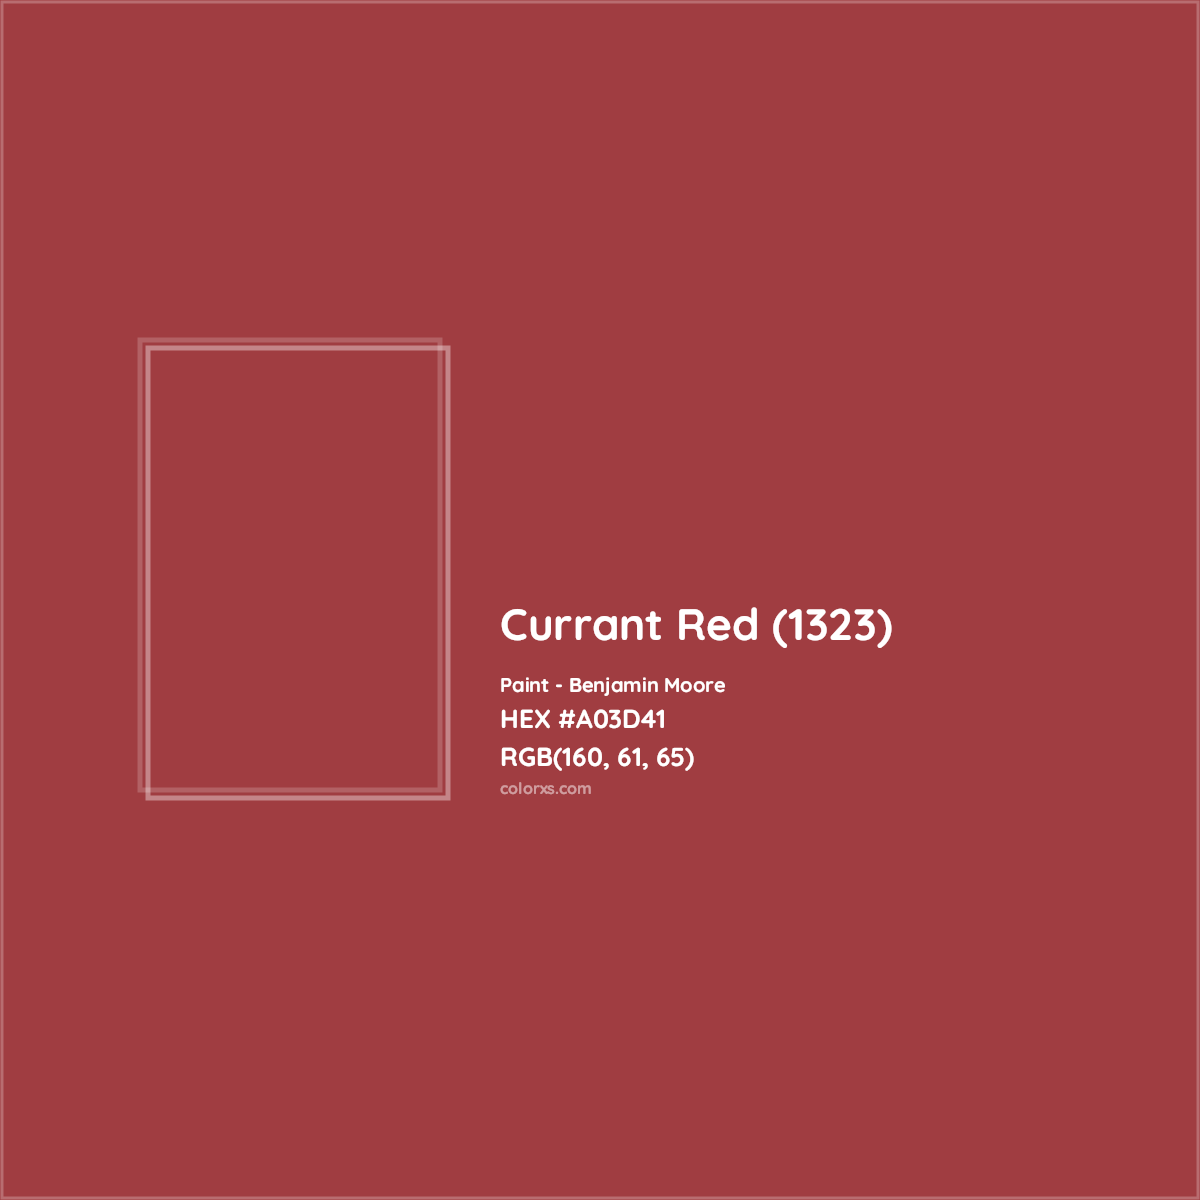 HEX #A03D41 Currant Red (1323) Paint Benjamin Moore - Color Code